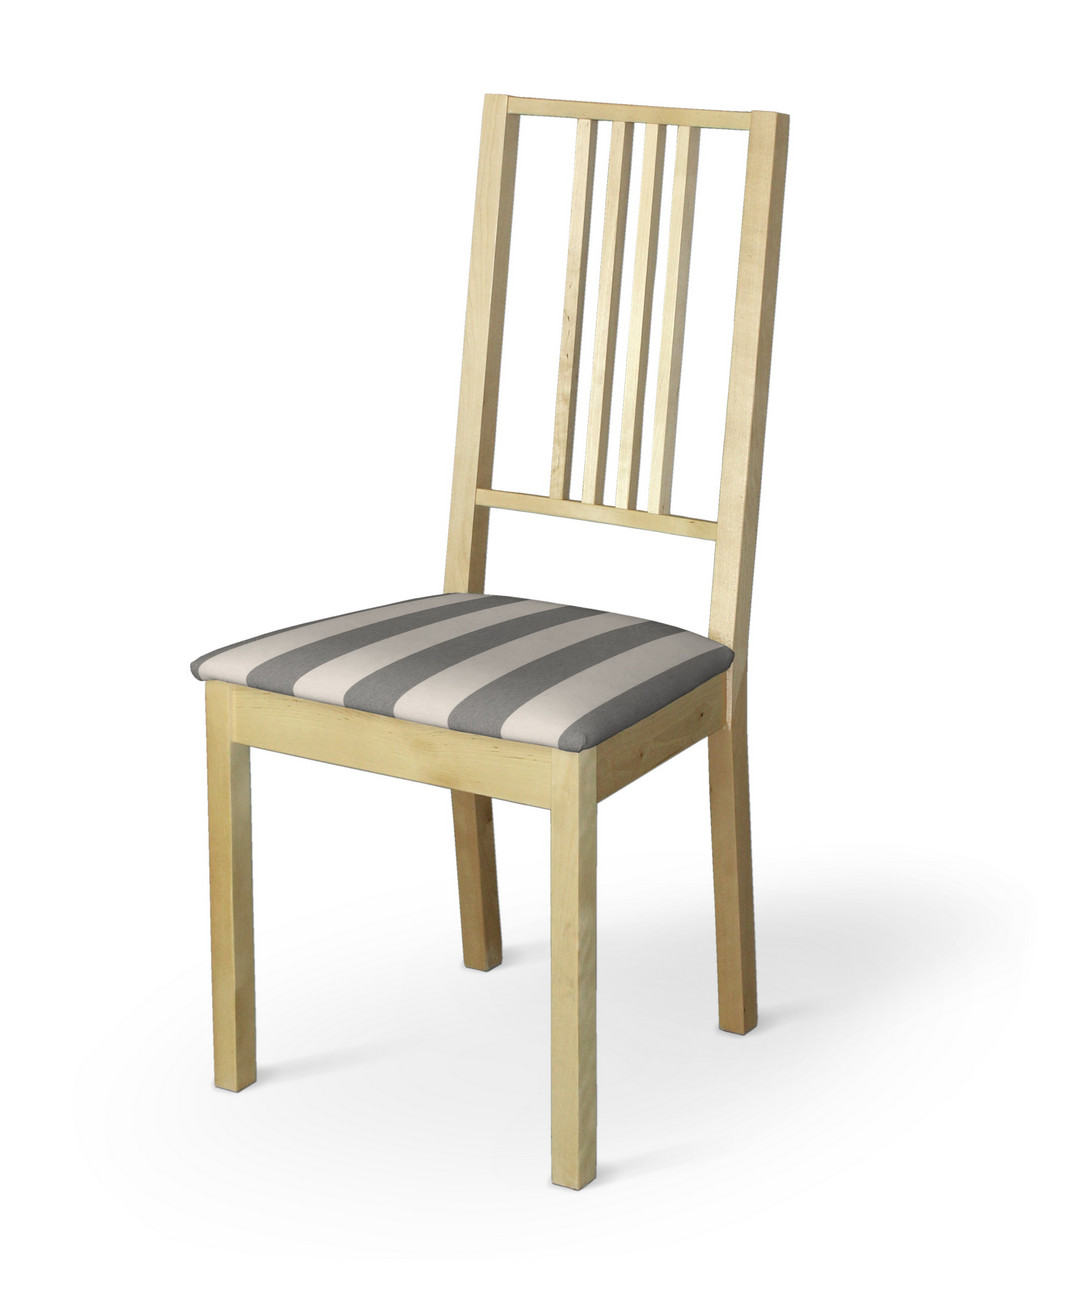 Dekoria Potah na sedák židle Börje, bílé a šedé svislé pruhy, potah sedák židle Börje, Quadro, 143-91